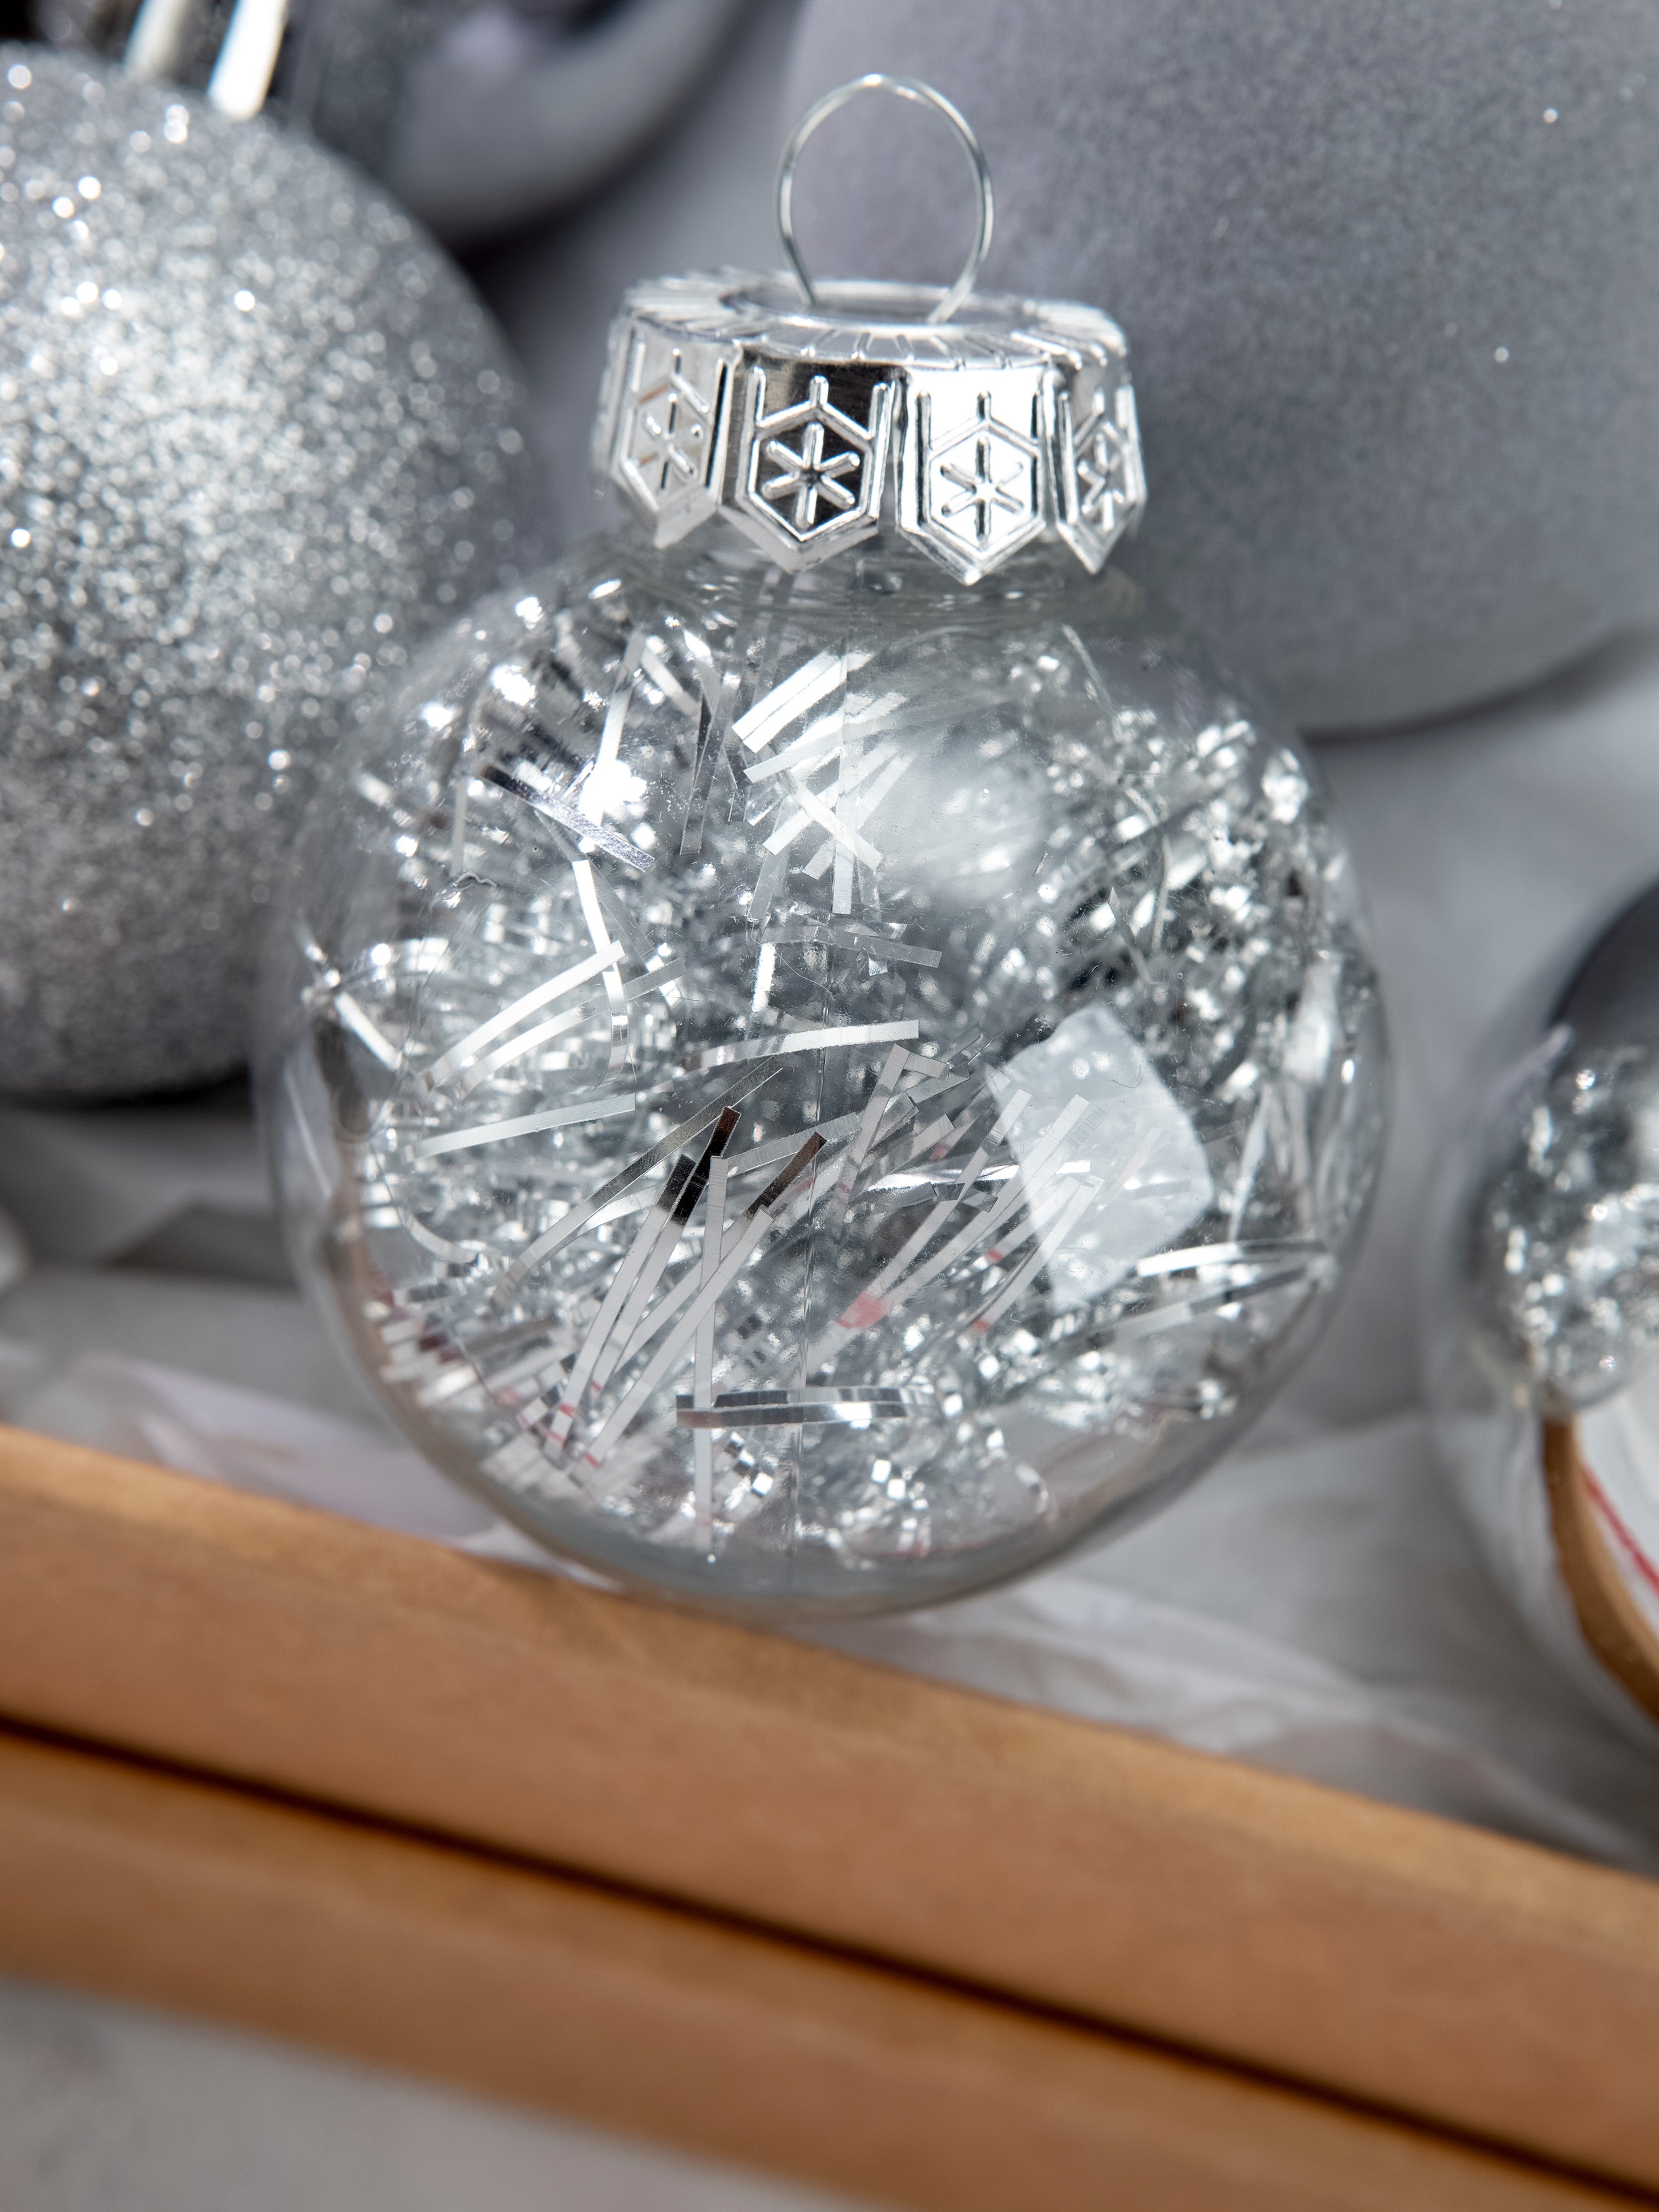 Silver Christmas ball Mixed Ornaments SET - 12 PCS